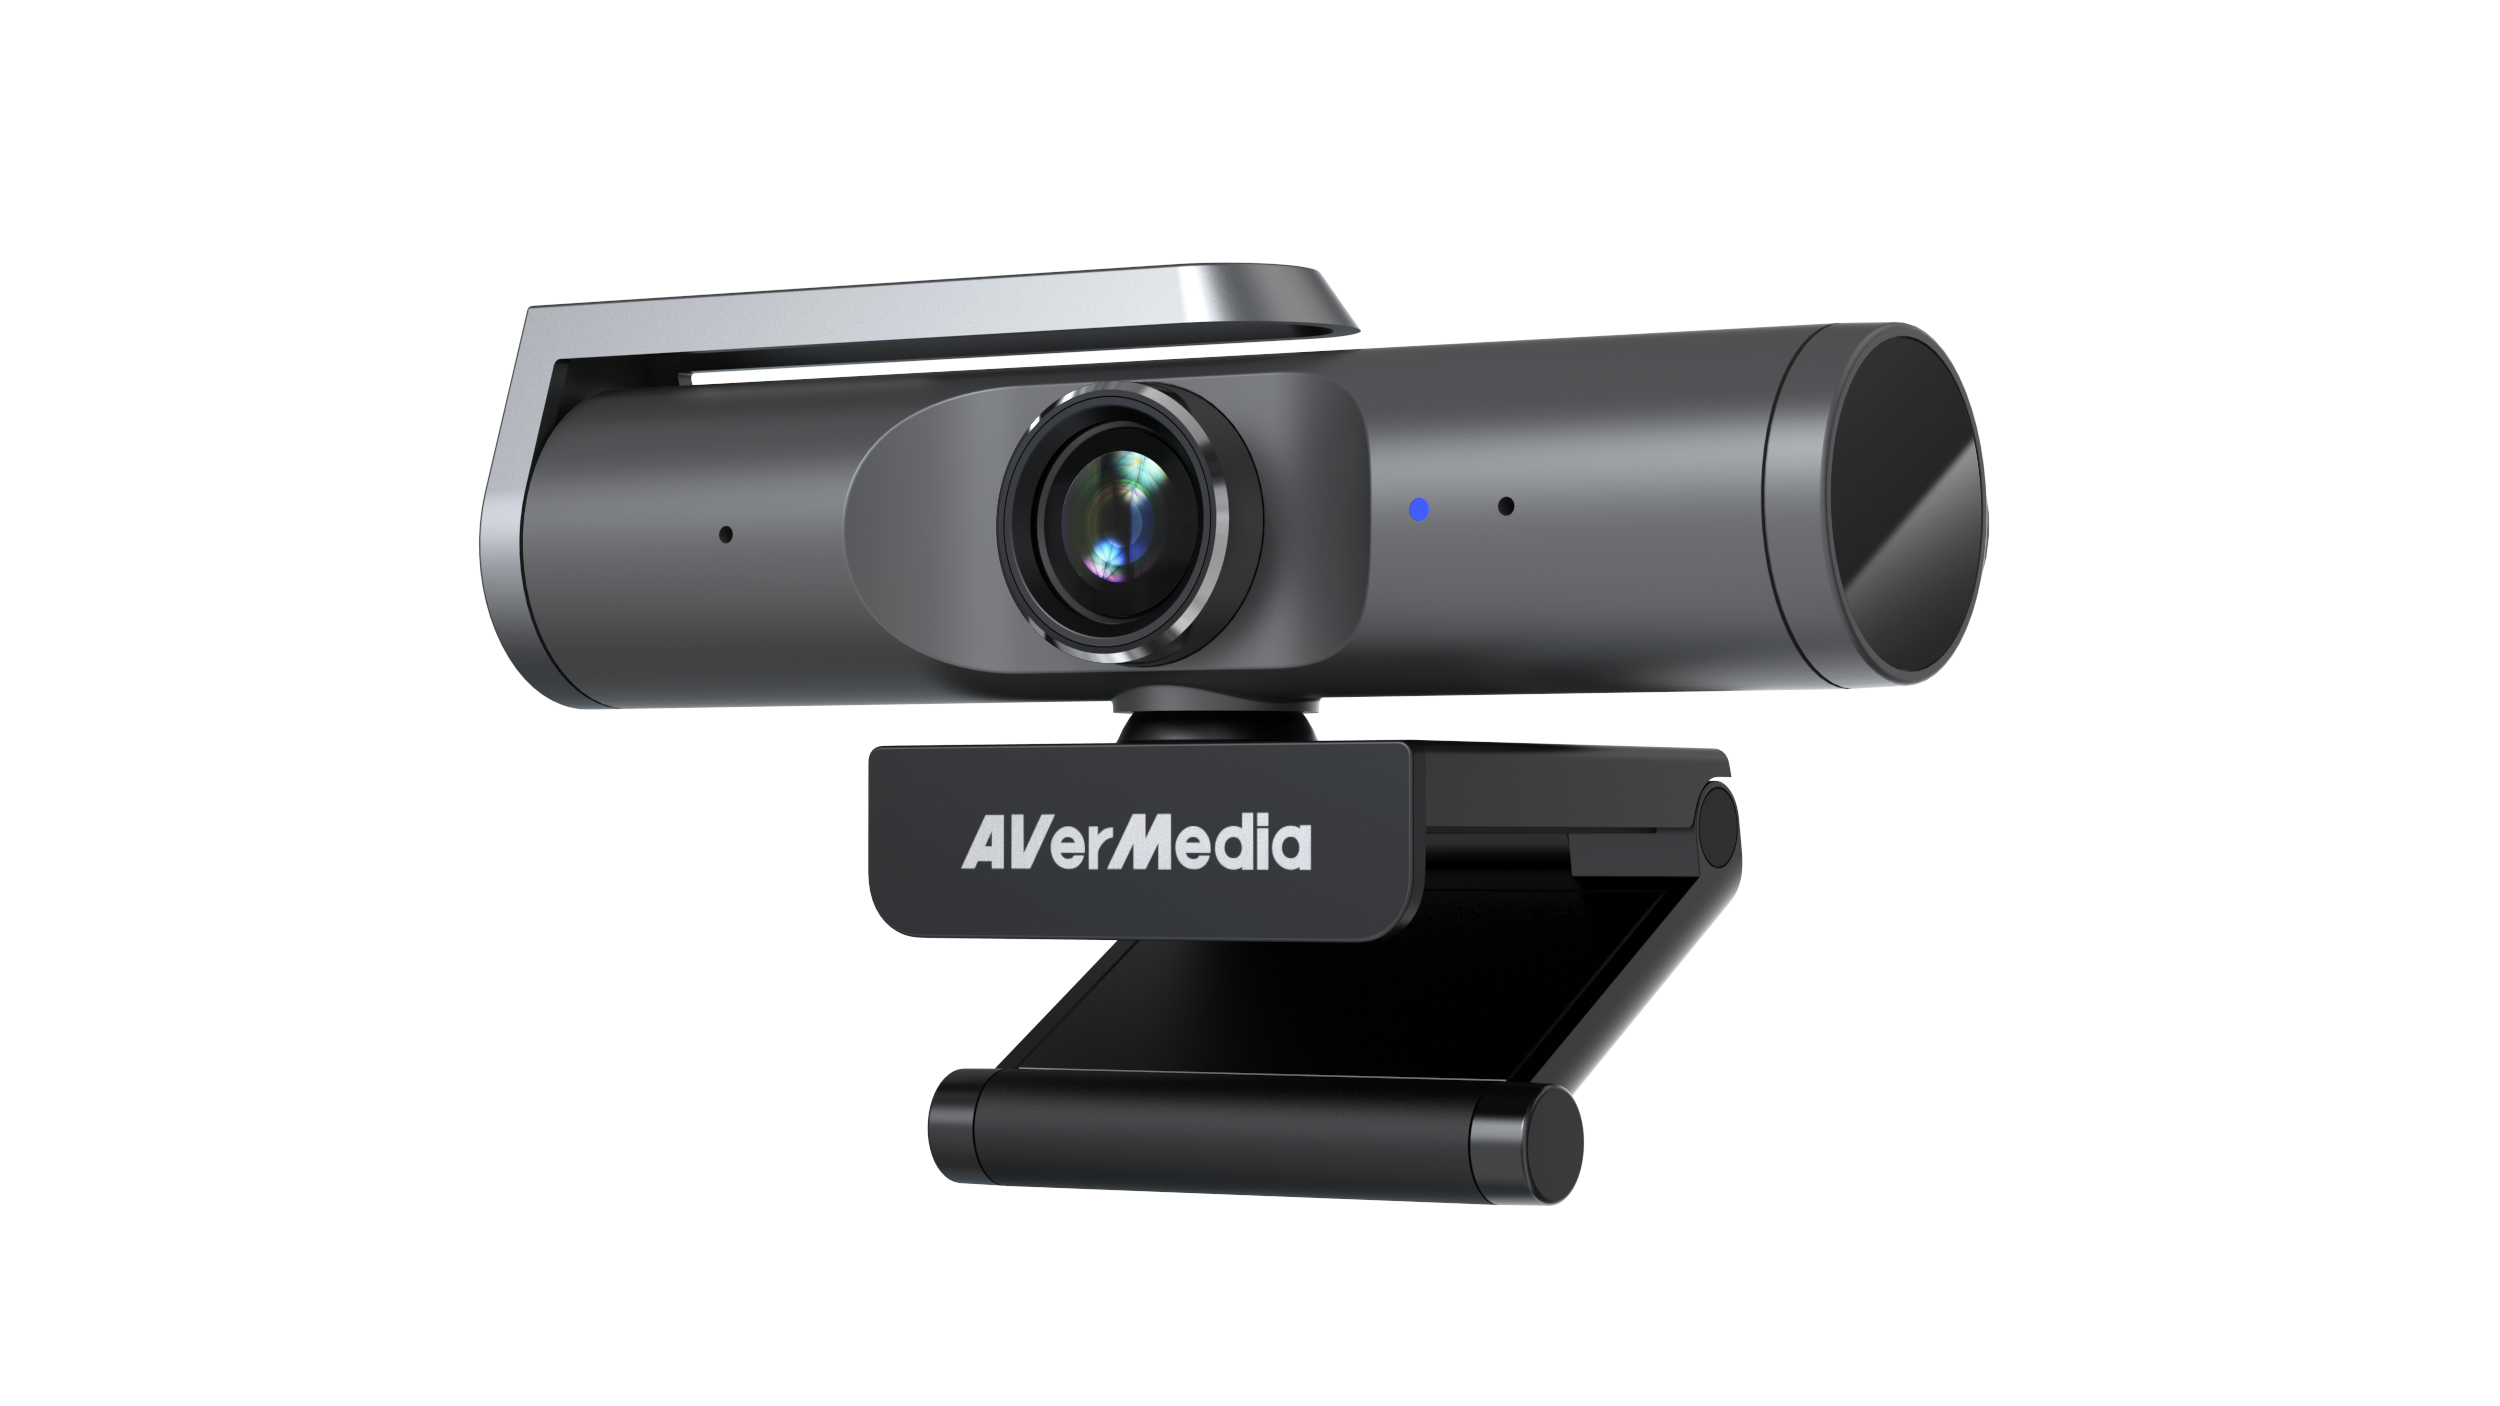 AVERMEDIA Webcam Live Stream Cam 515 (PW515), 4 K, HDR